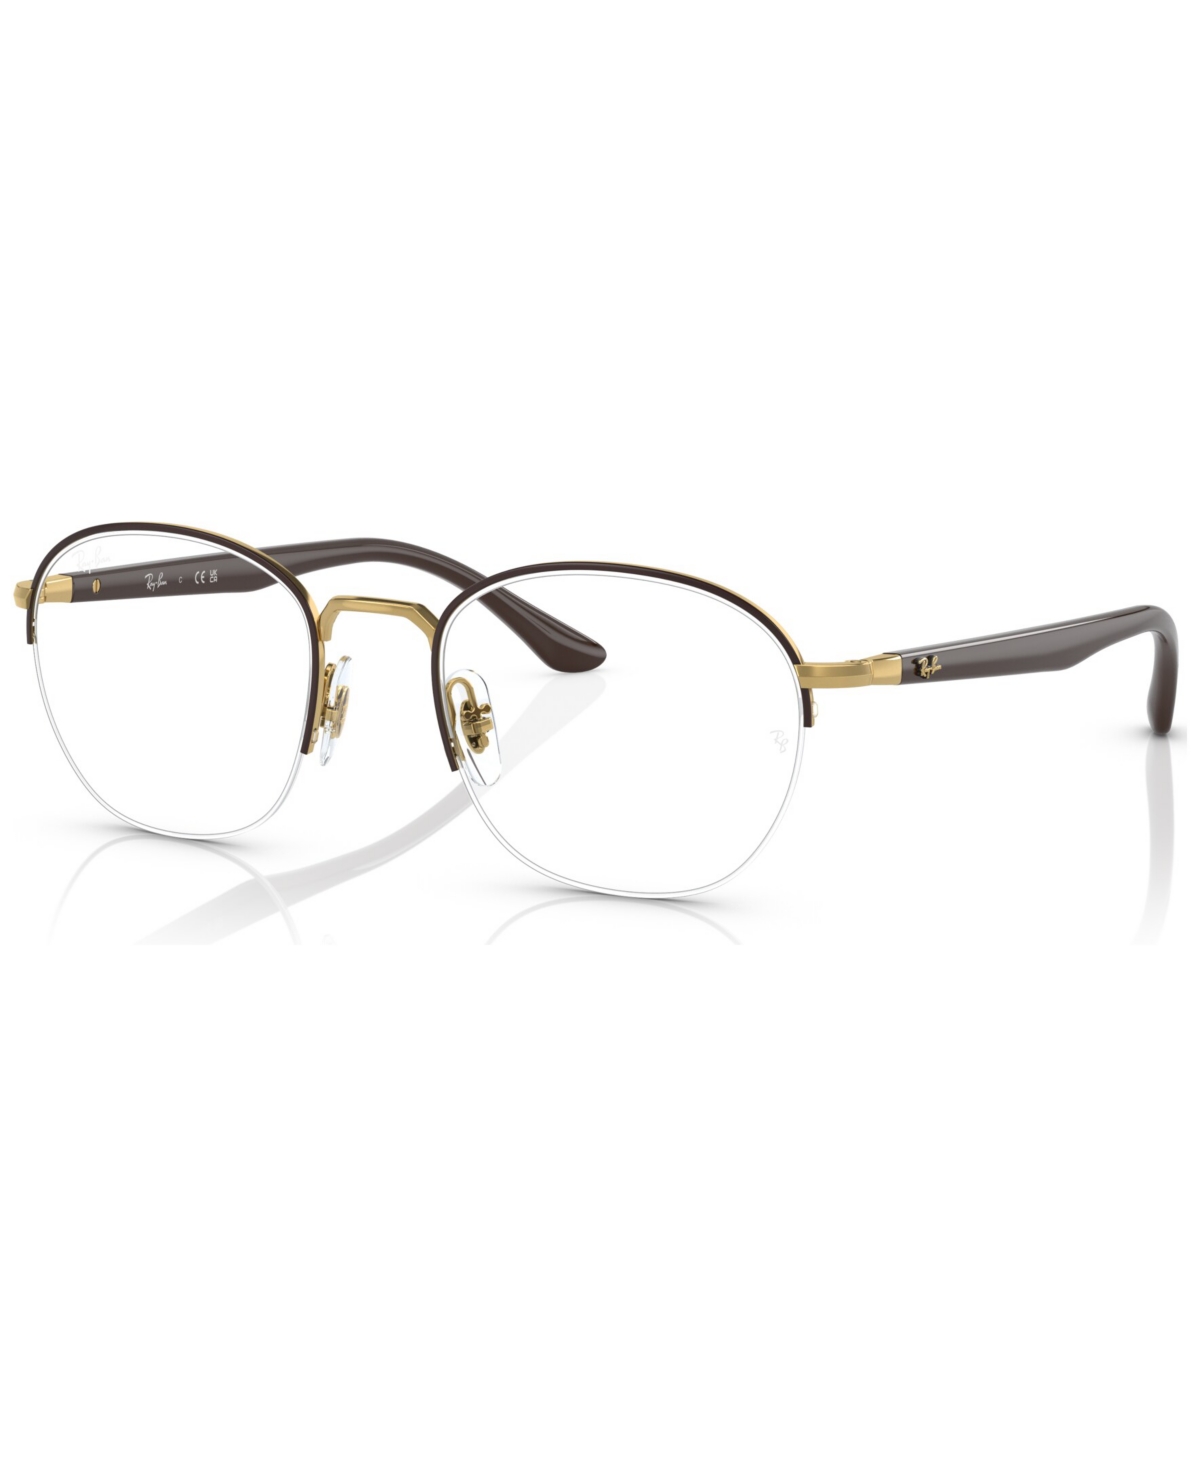 Unisex Square Eyeglasses, RX648752-o - Brown On Arista